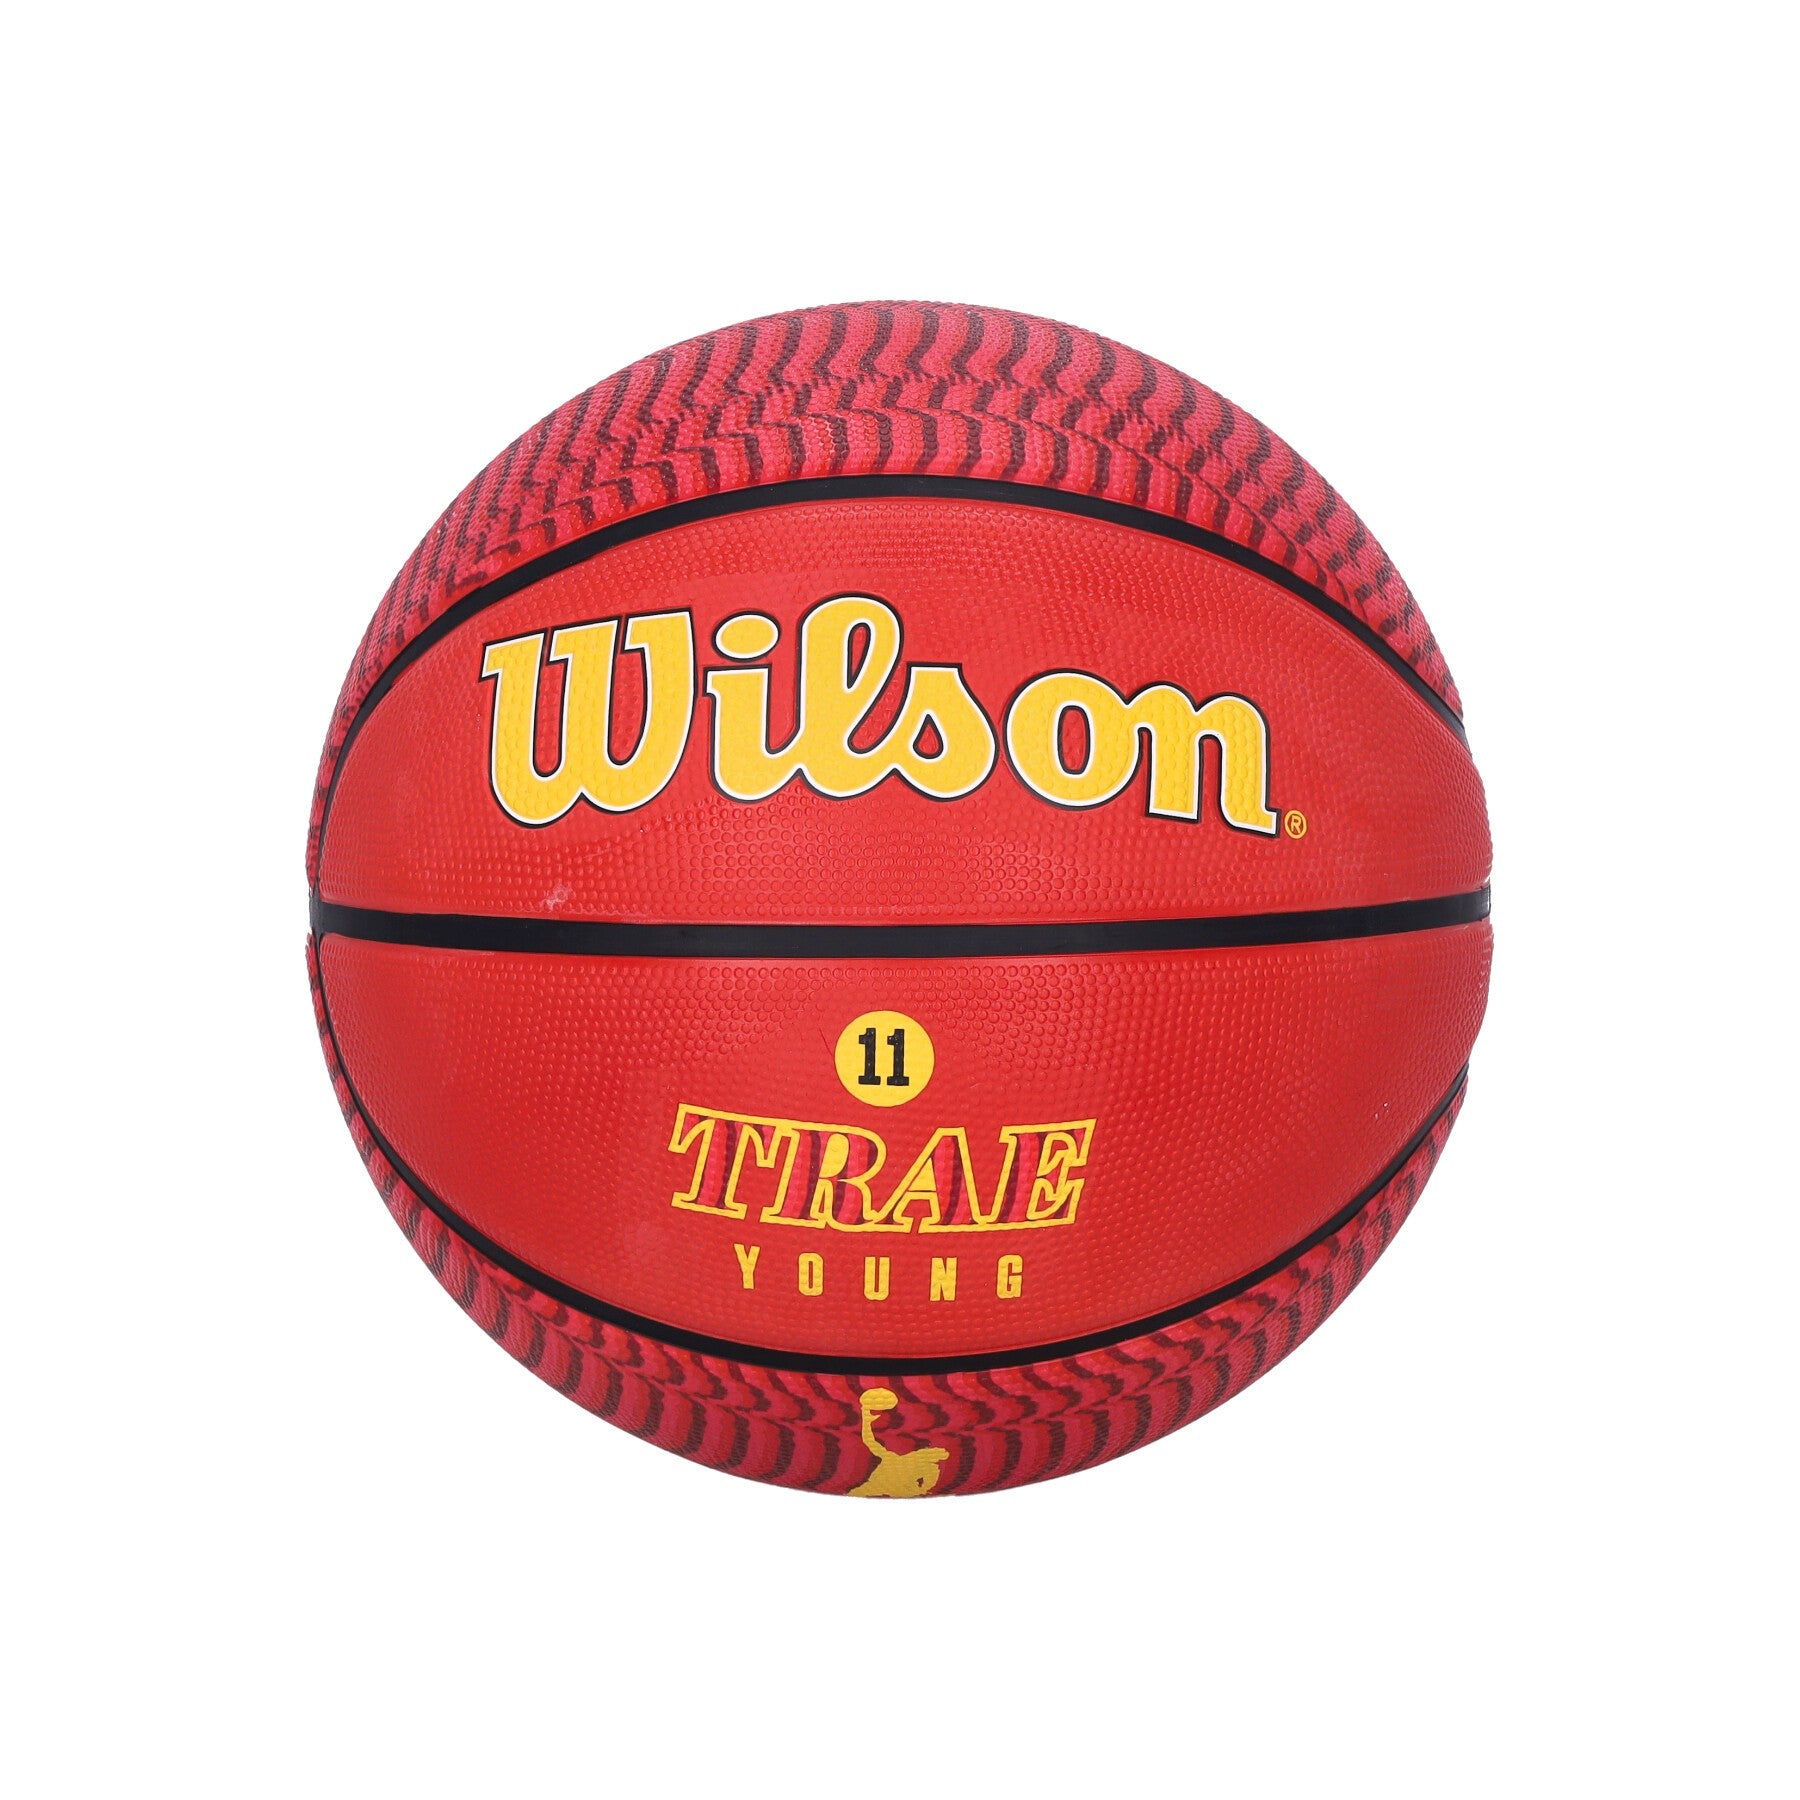 Wilson Team, Pallone Uomo Nba Trae Young Icon Outdoor Basketball Size 7, Red